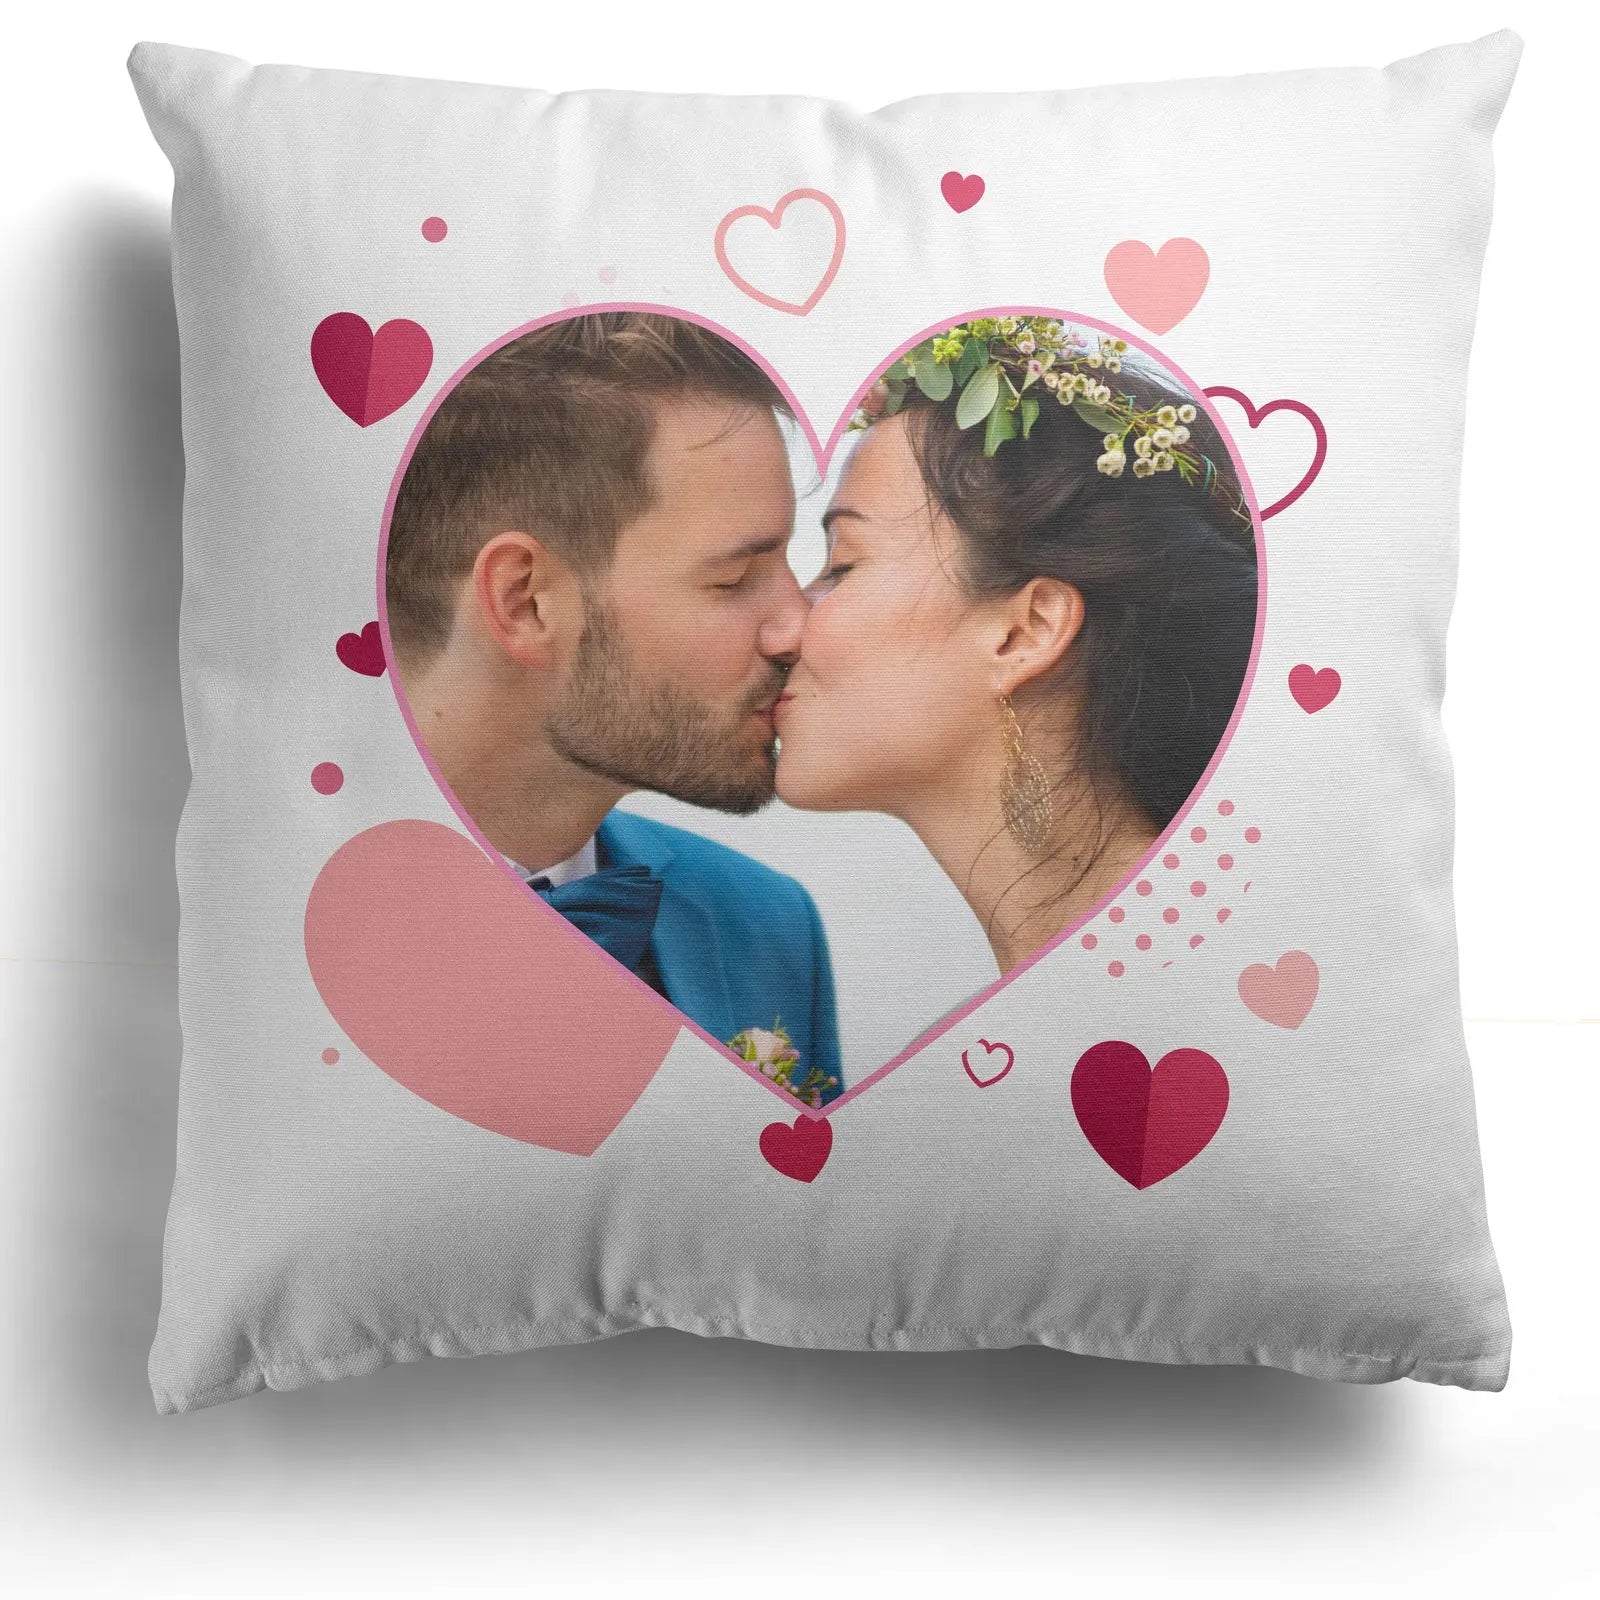 Personalised Cushion  Valentines Day| Couples & Romance  40x40cm  1 Image  Heart - CushionPop